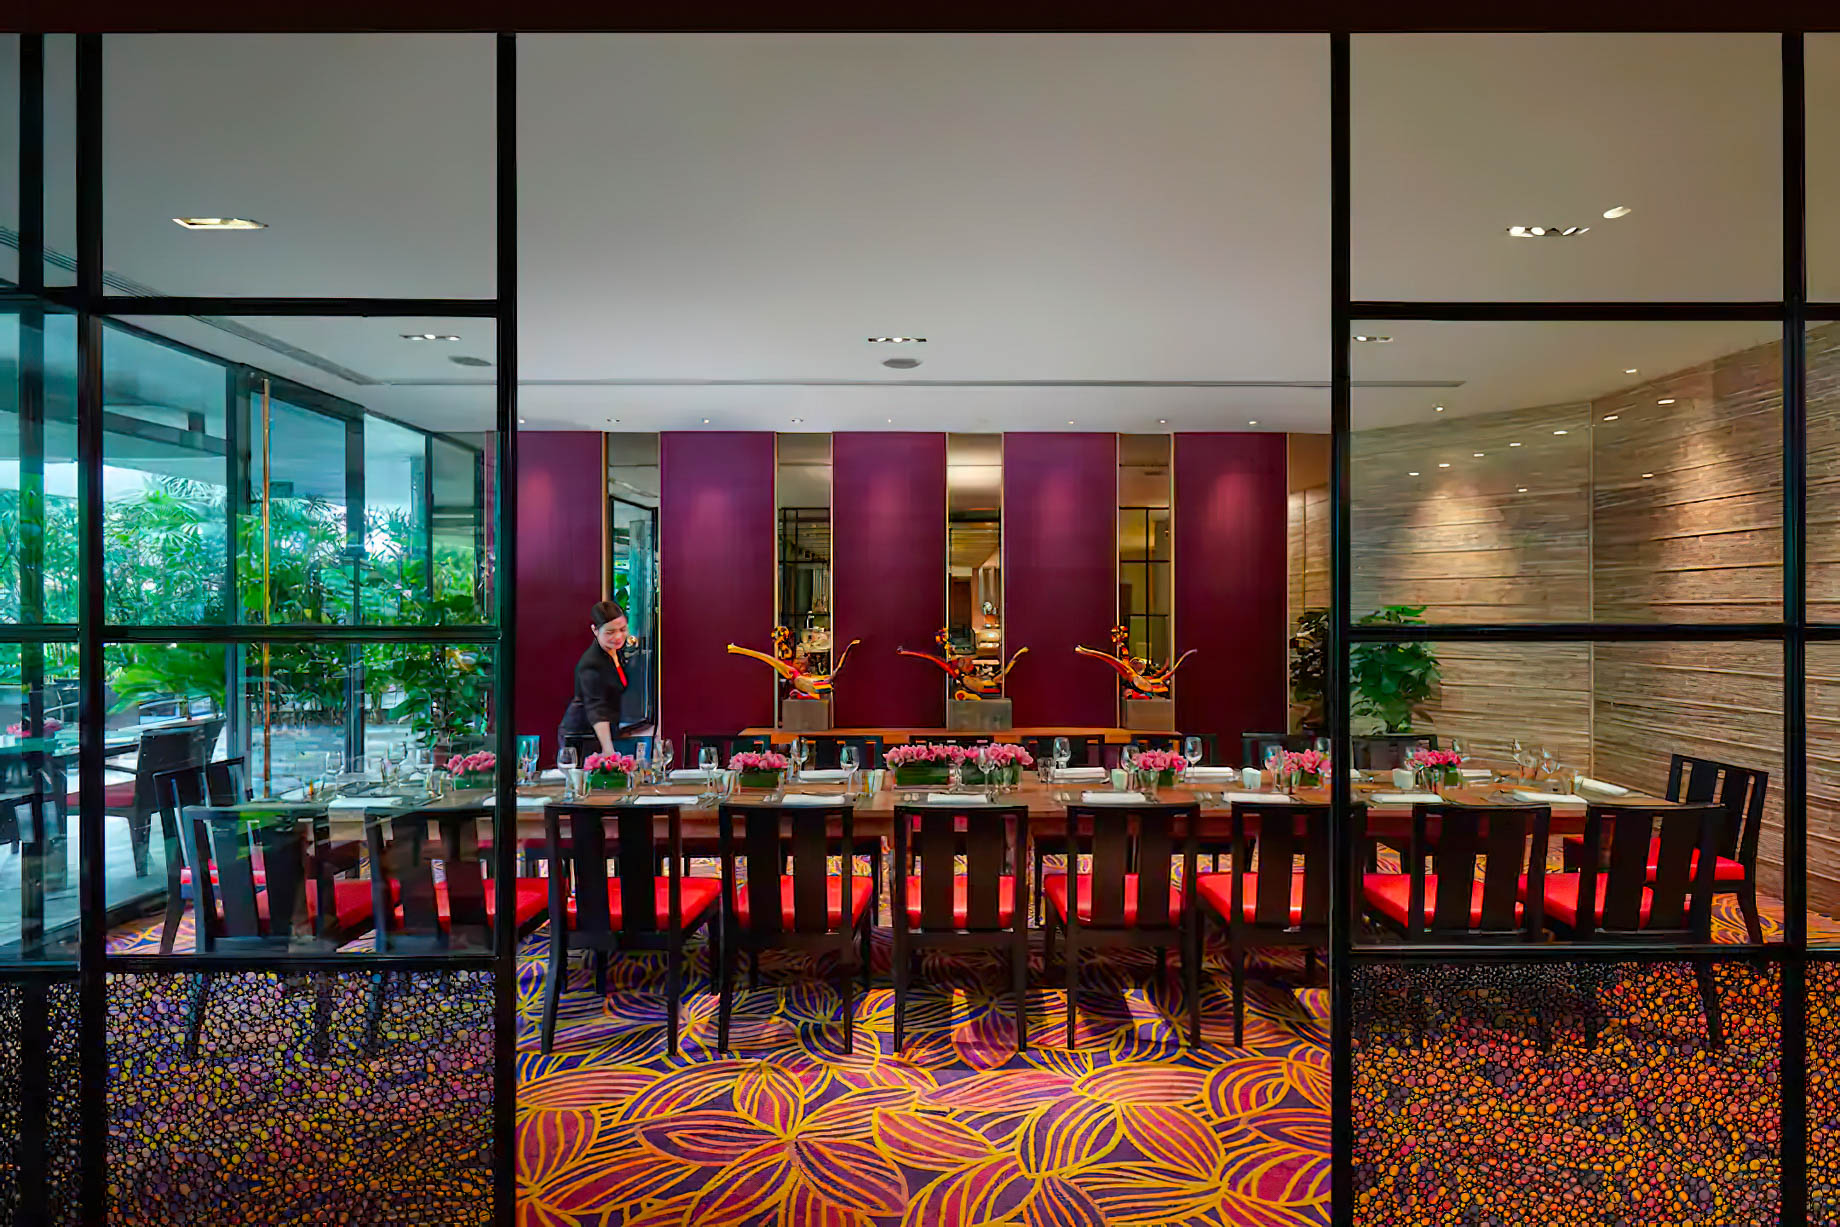 Mandarin Oriental, Singapore Hotel – Singapore – Melt Cafe Private Dining